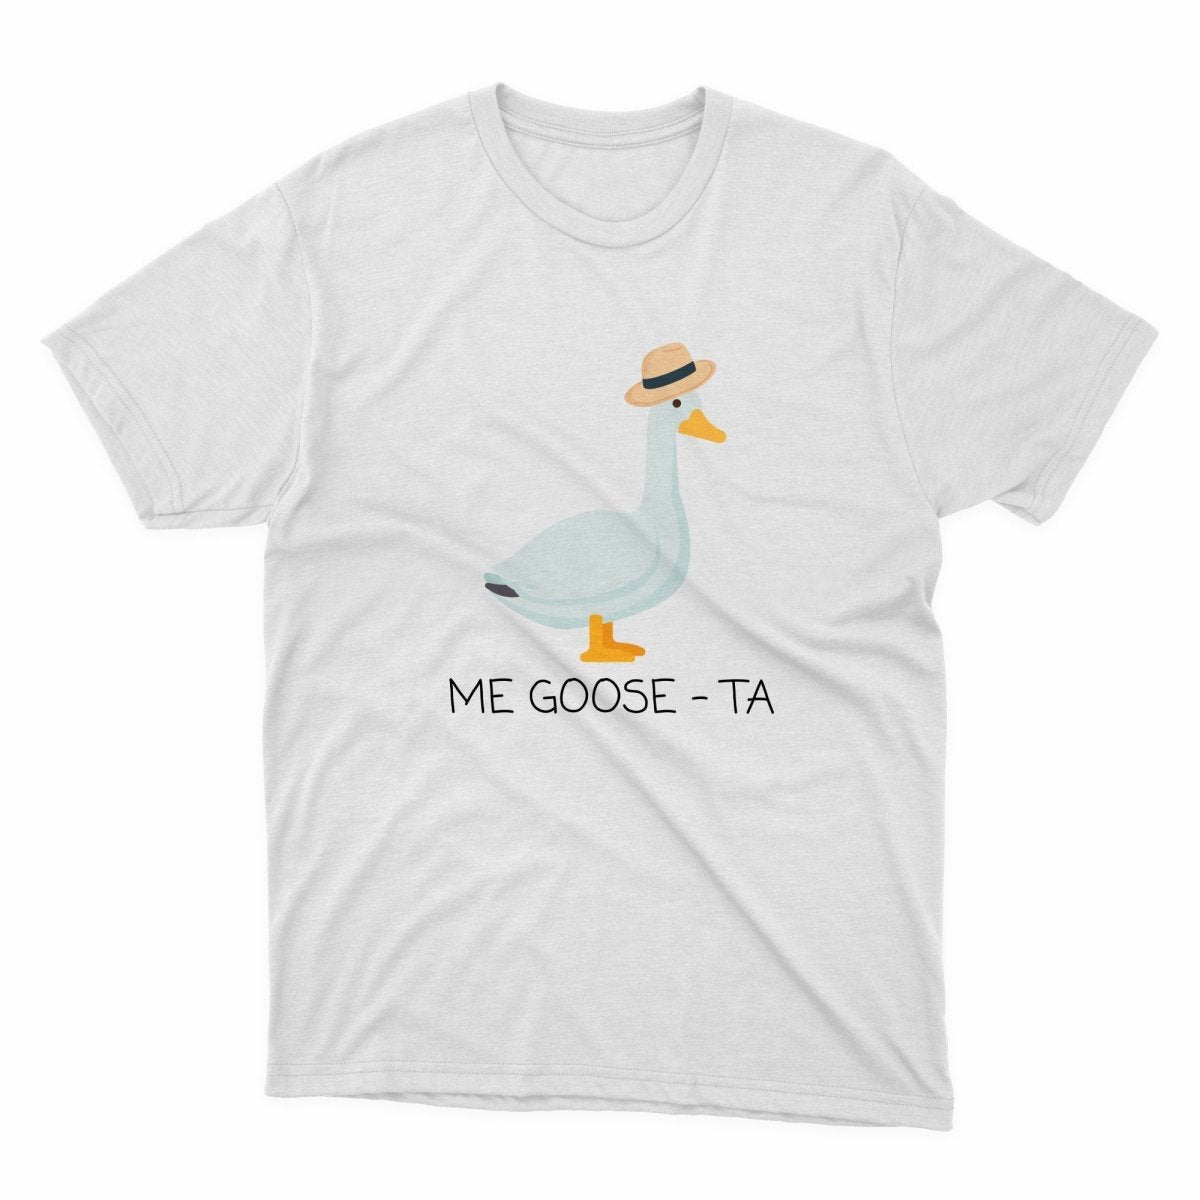 Me Goose Ta Shirt - stickerbullMe Goose Ta ShirtShirtsPrintifystickerbull74154189053434863924WhiteSa white t - shirt with a duck wearing a hat